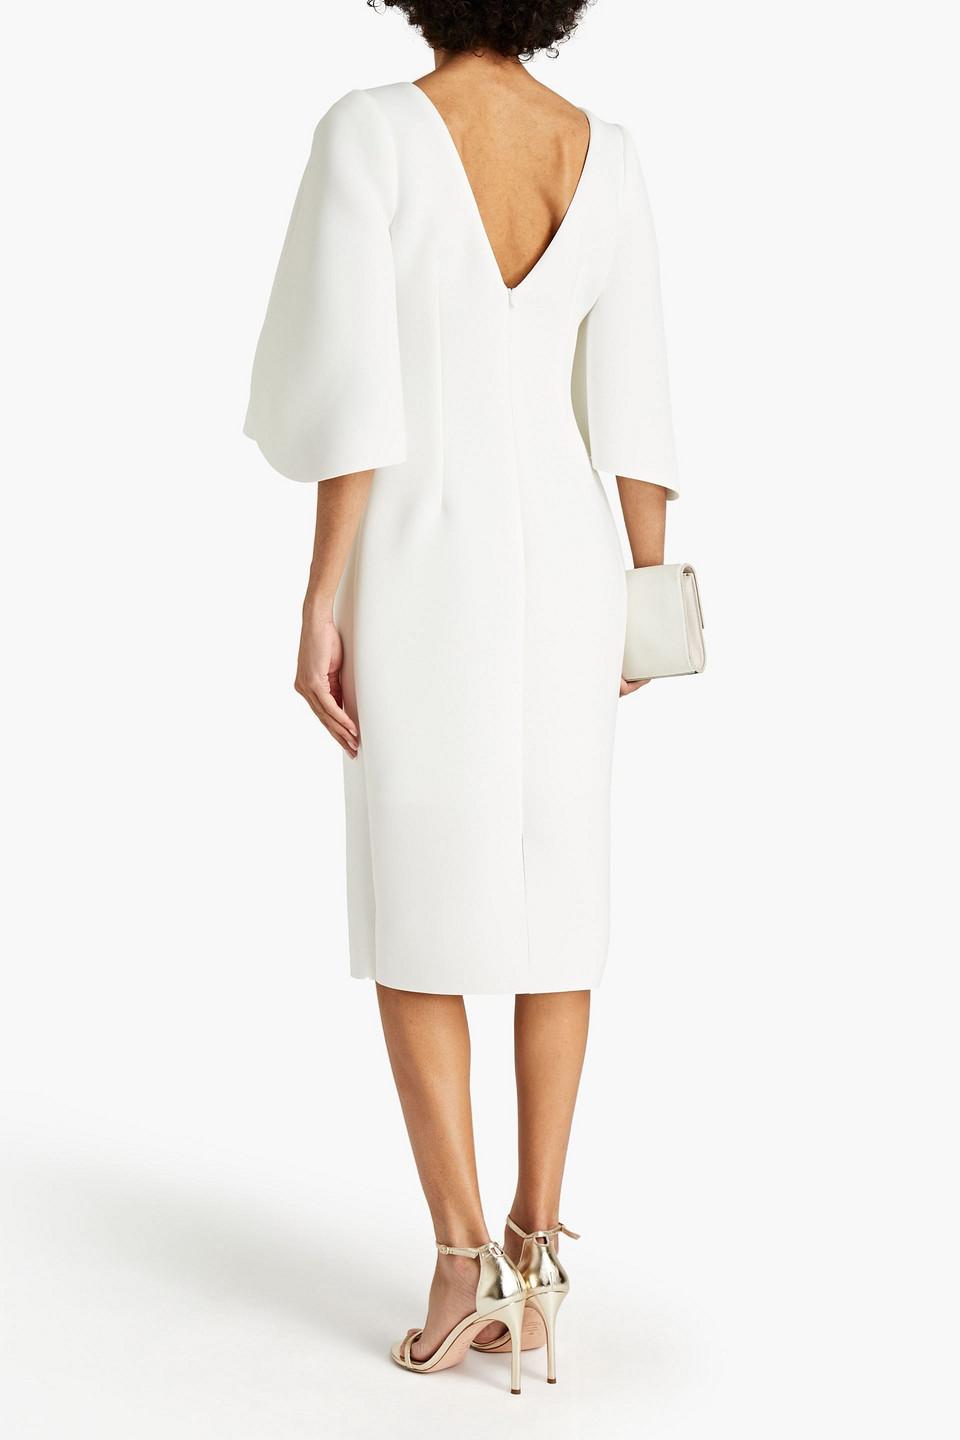 Badgley Mischka Synthetic Scuba Dress in White | Lyst